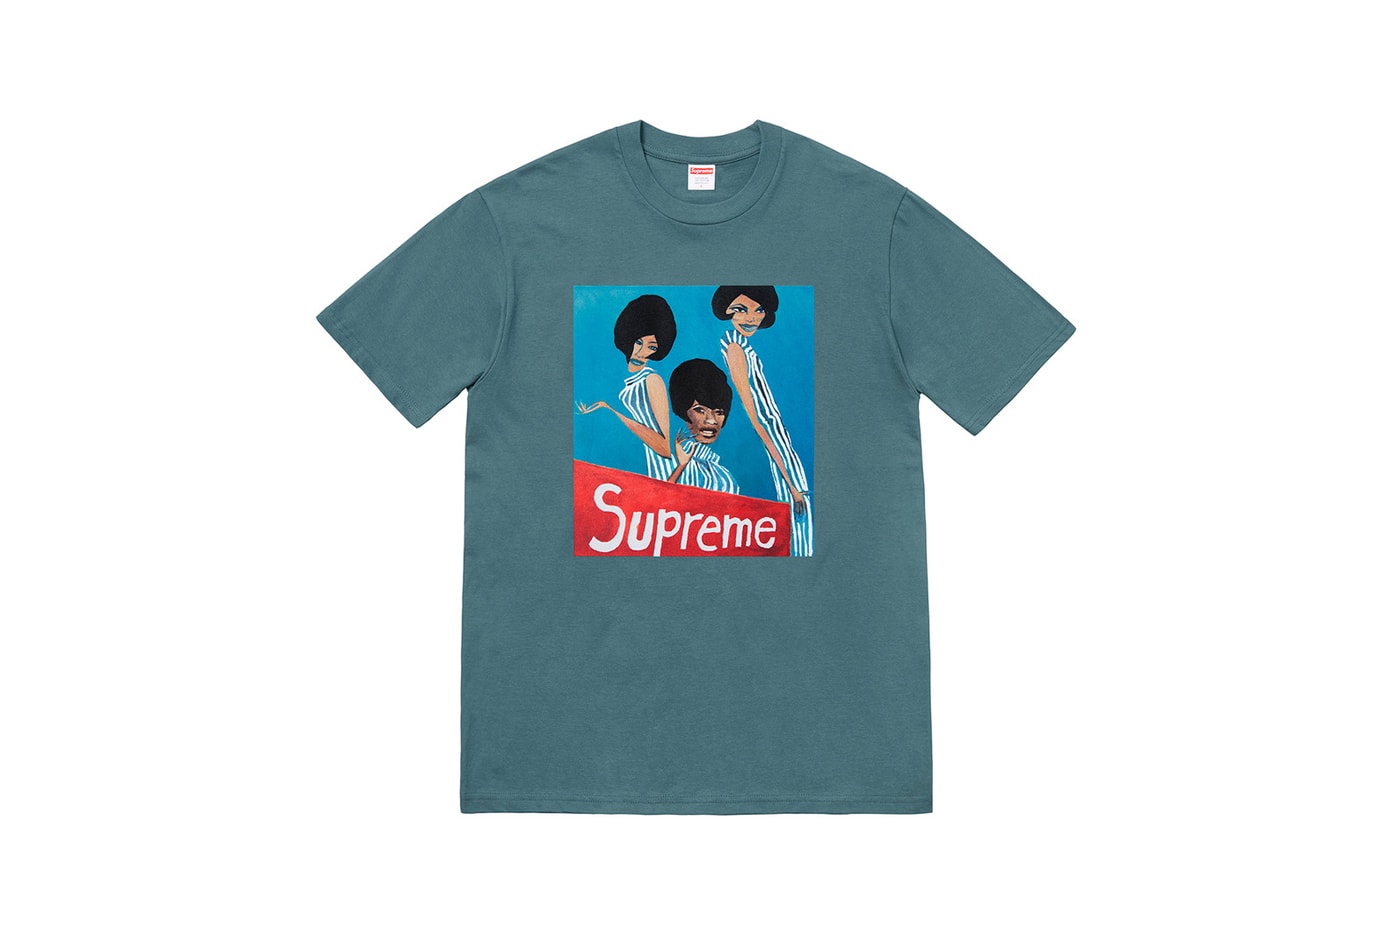 Supreme Fall 2018 Tabboo! T-Shirt Tees Teal